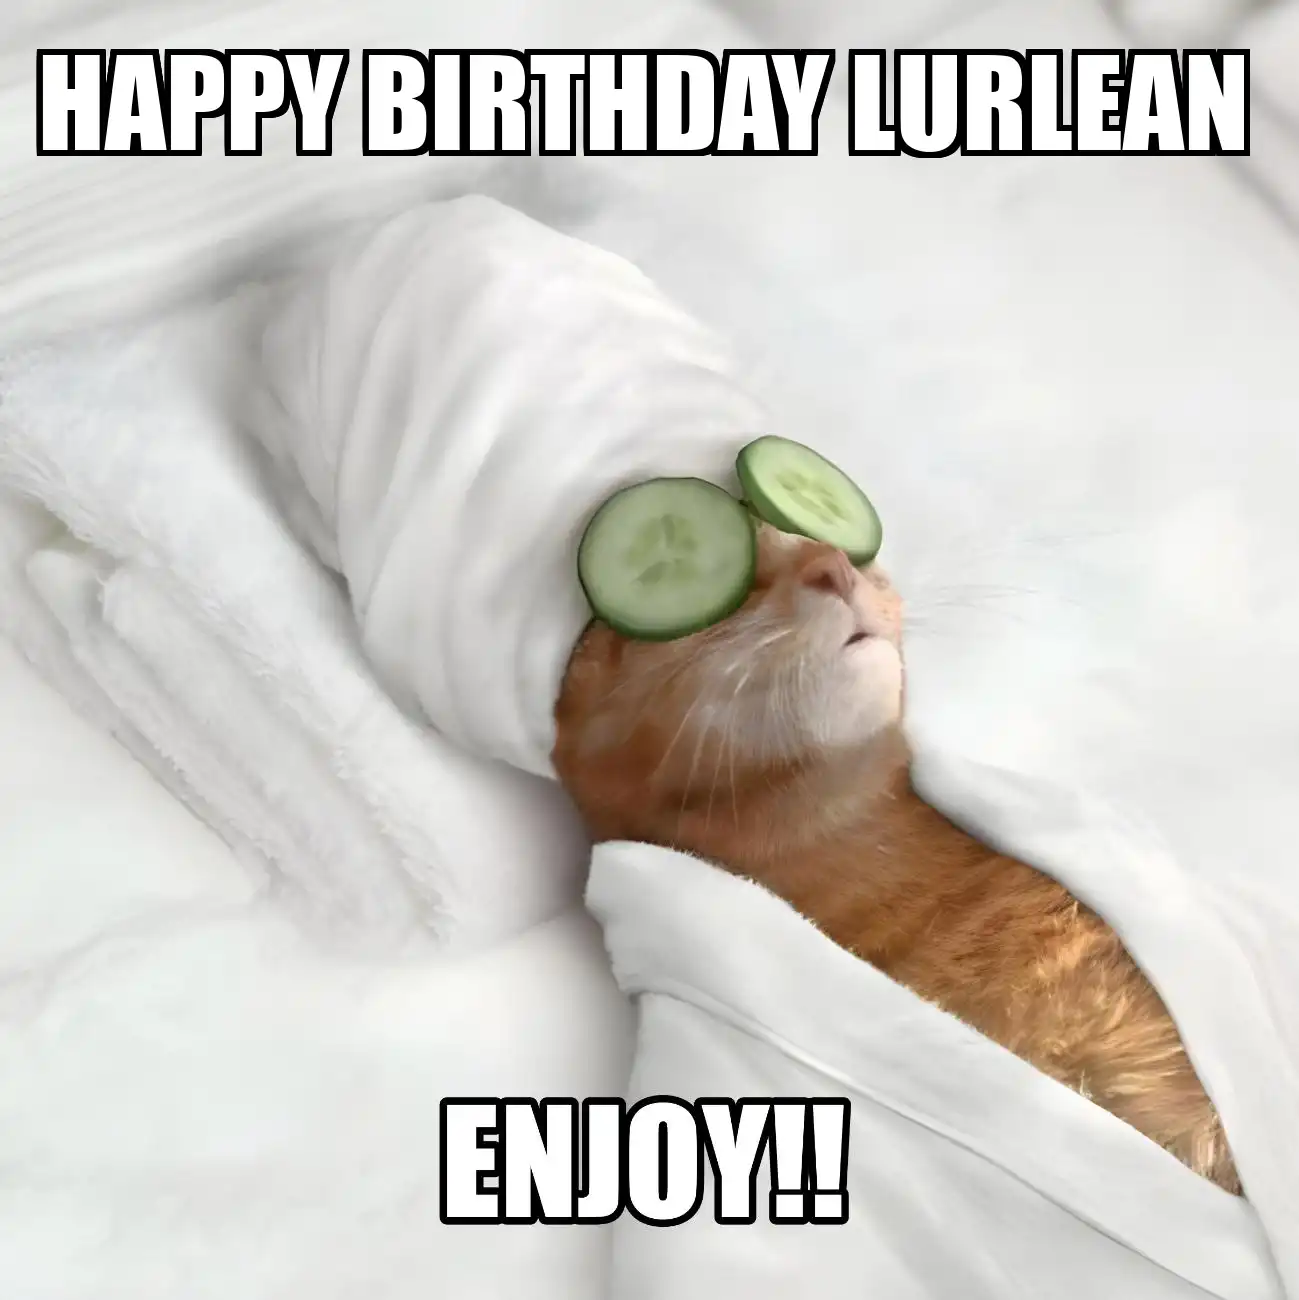 Happy Birthday Lurlean Enjoy Cat Meme